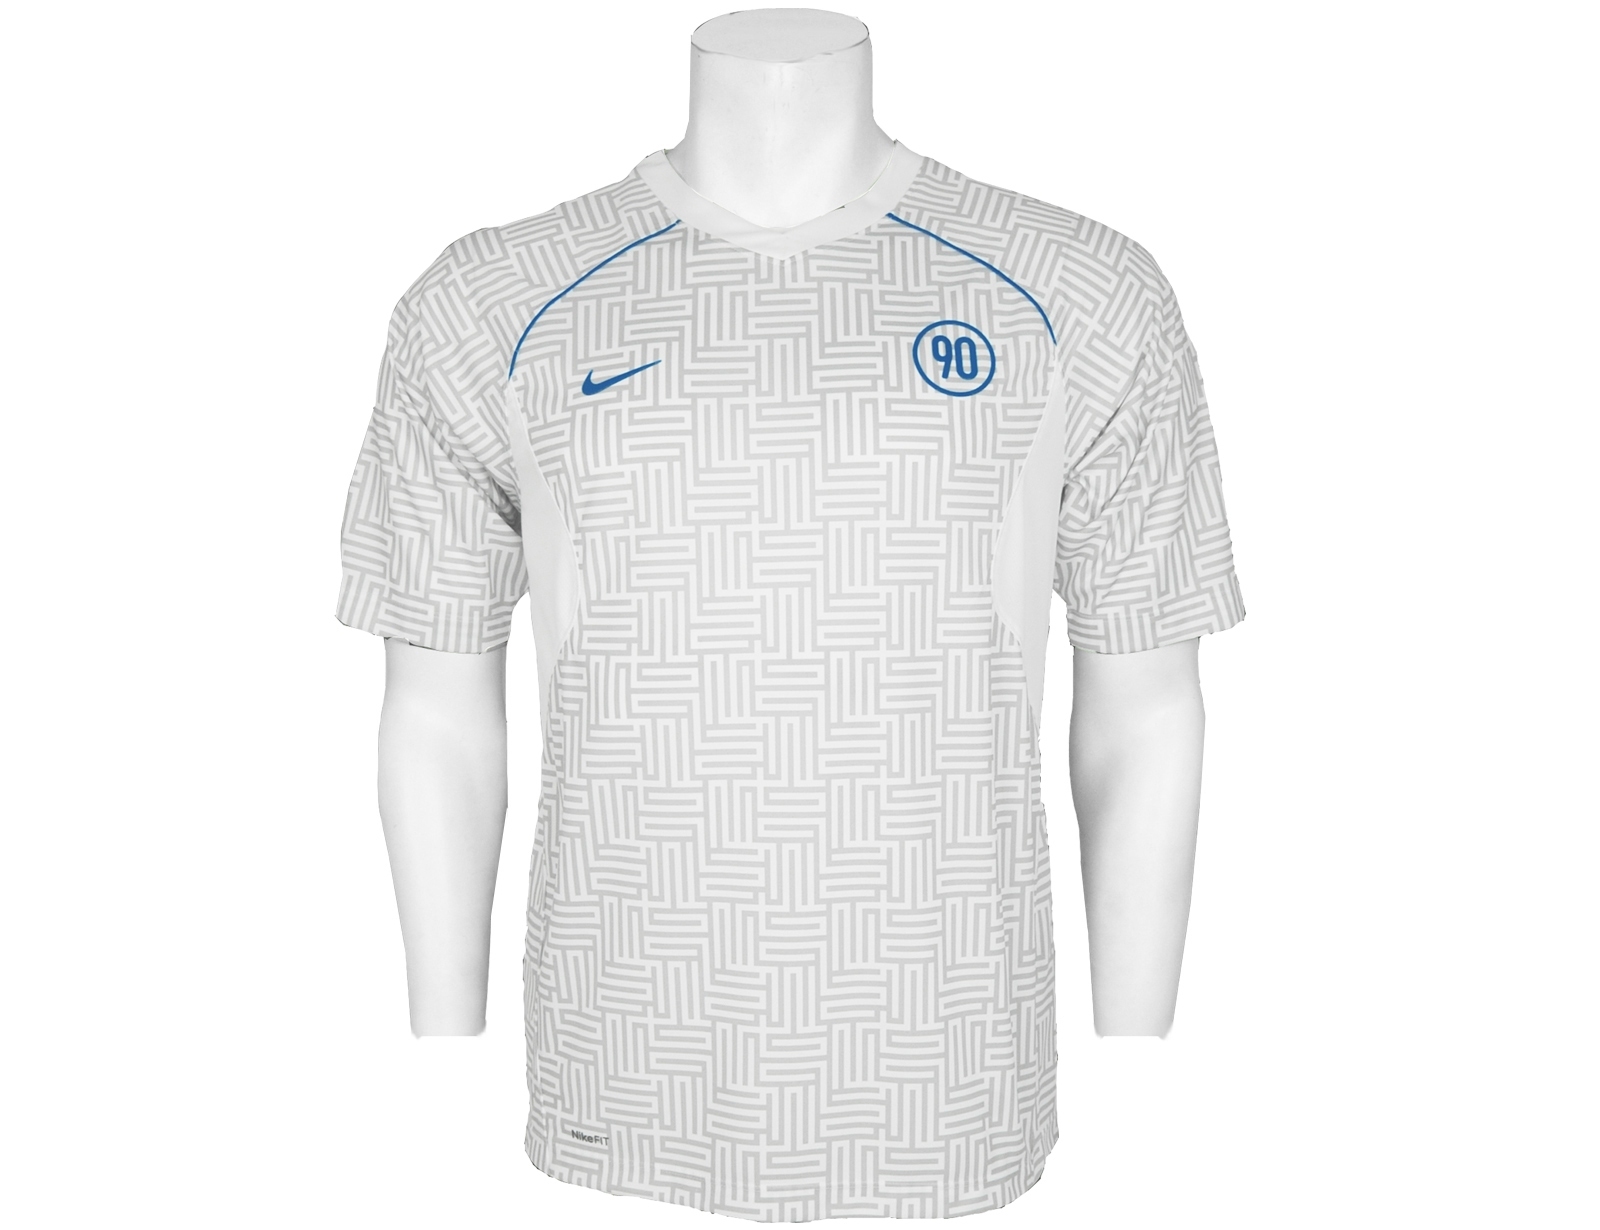 Avantisport - Nike - T90 Short Sleeve Graphic Tee - White/light Grey/blue